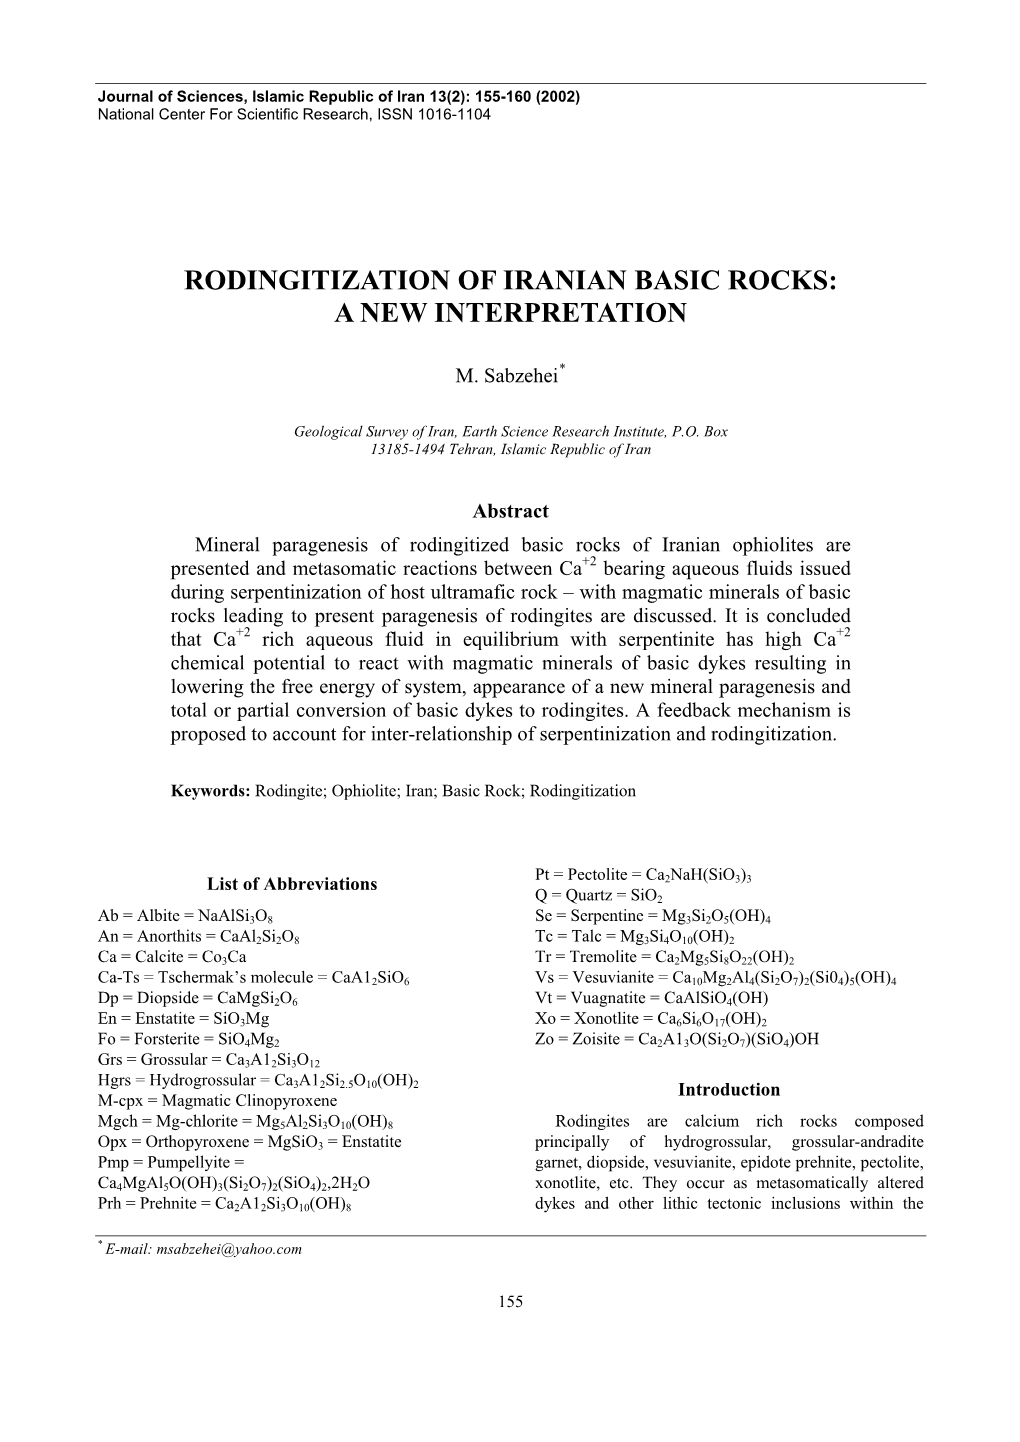 Rodingitization of Iranian Basic Rocks: a New Interpretation